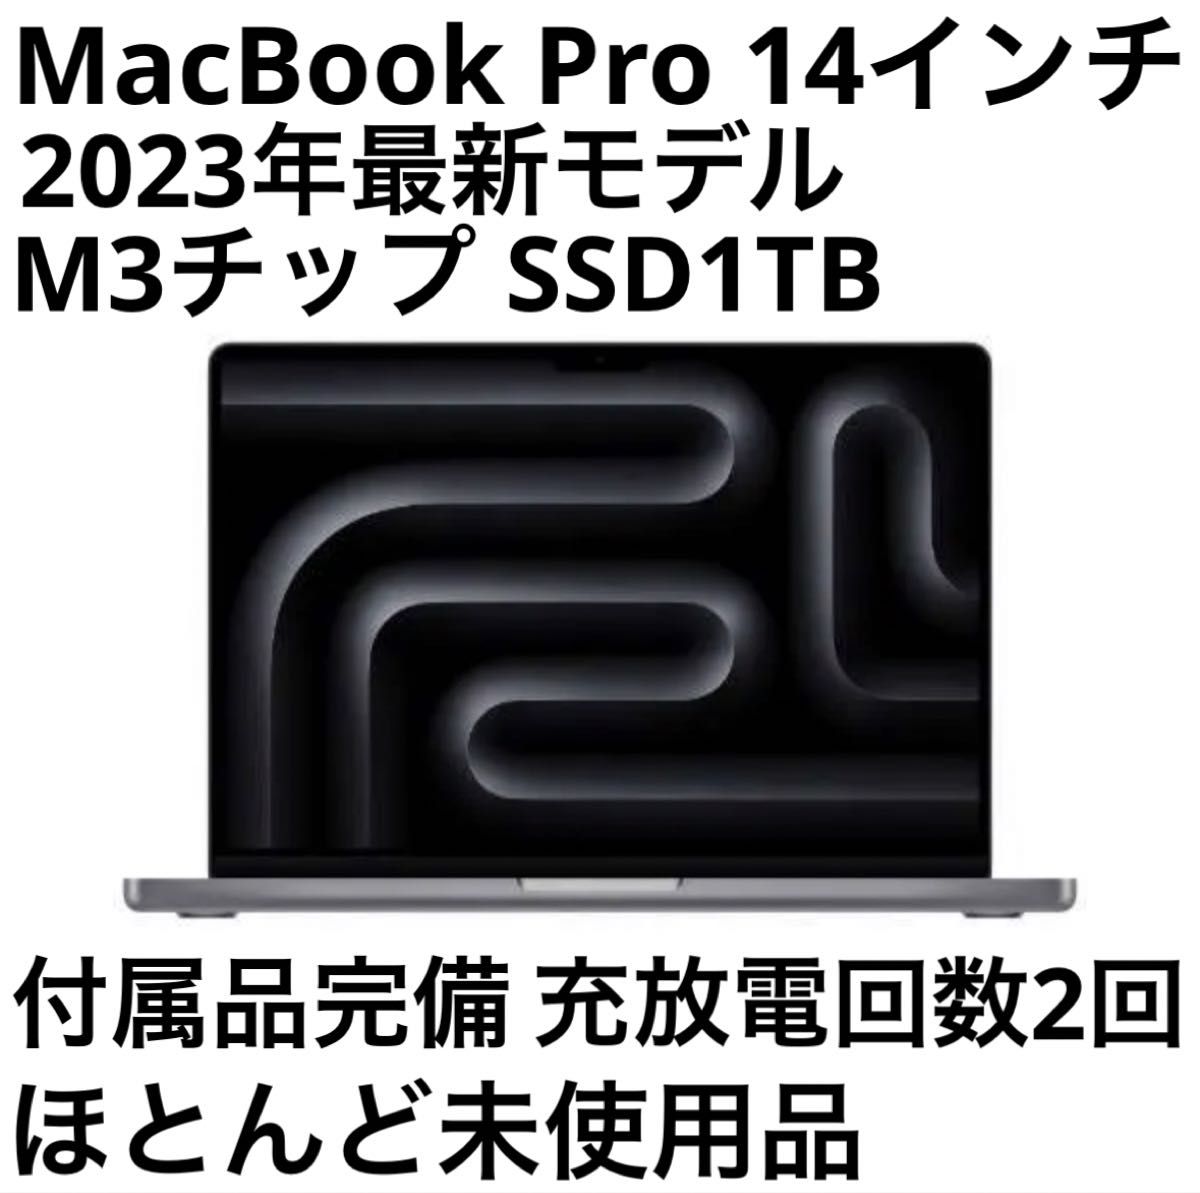 MacBook Pro 14-inch M3 2023年モデル メモリ8GB SSD1TB 